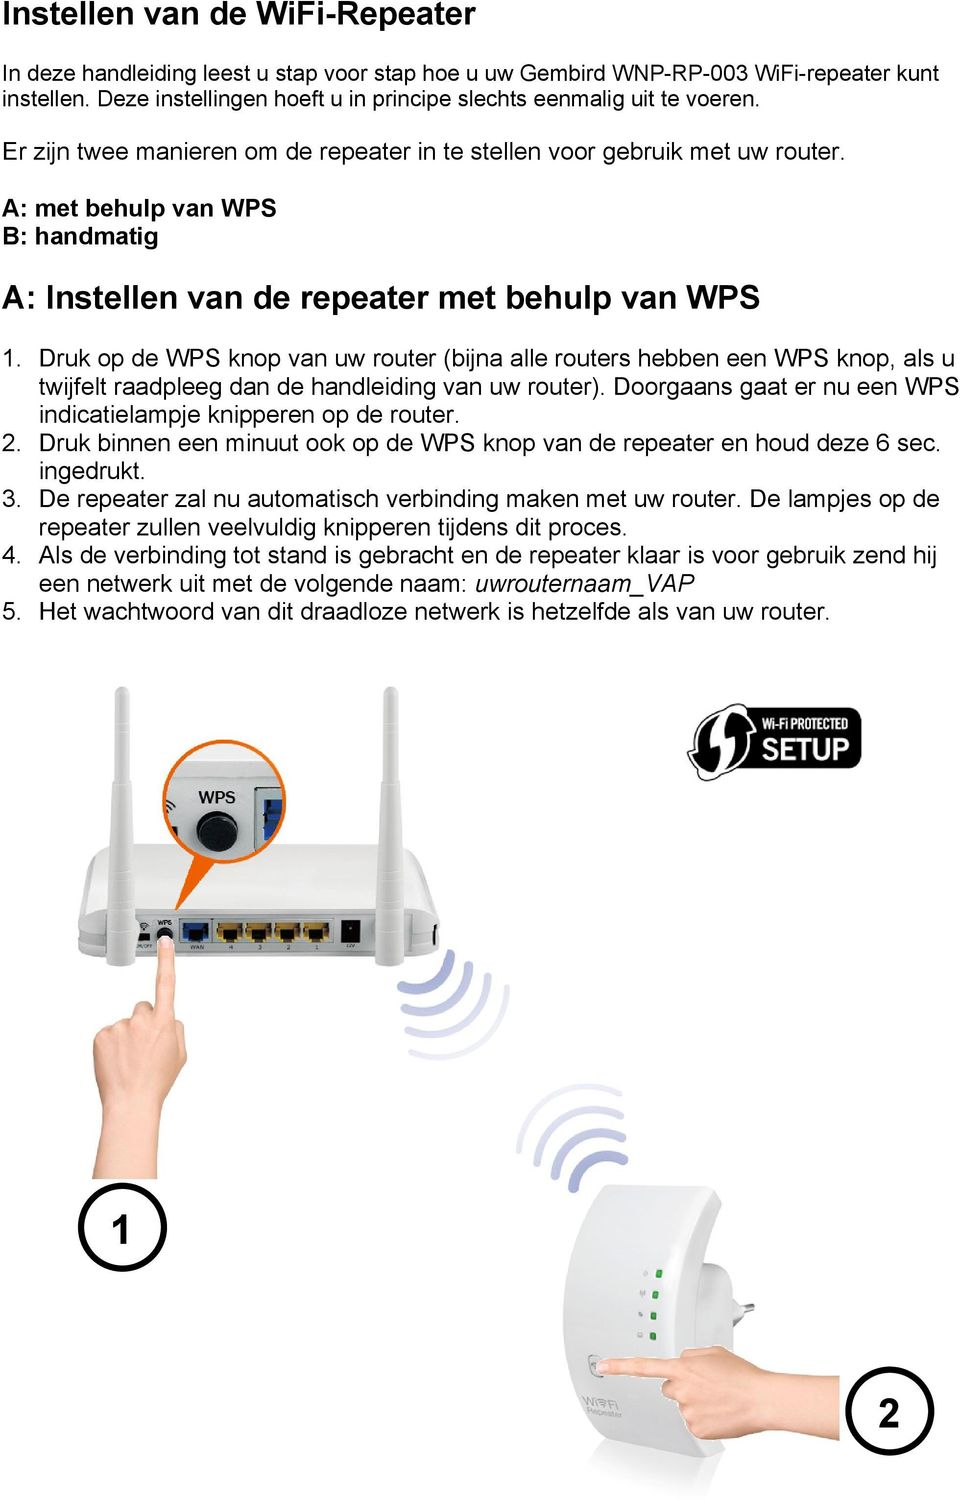 Installatiehandleiding. WNP-RP-003 WiFi-repeater, 300 mbps - PDF Gratis  download